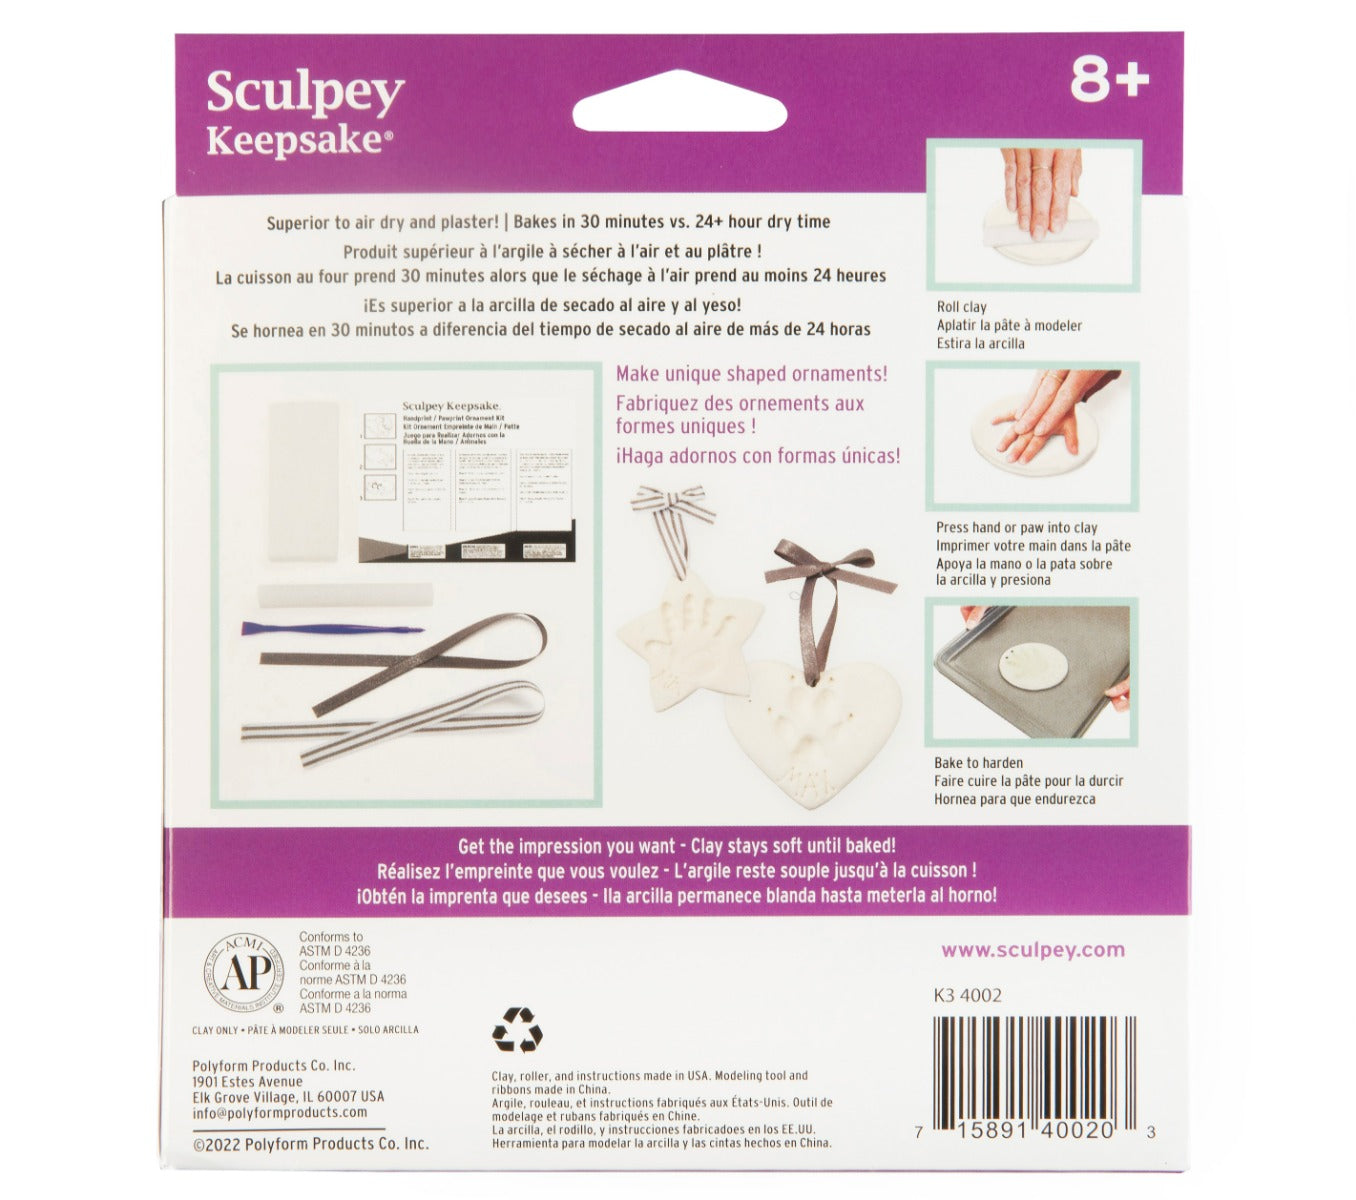 Sculpey 3oz Keepsake Baby Impression Modeling Clay Kit 5pc